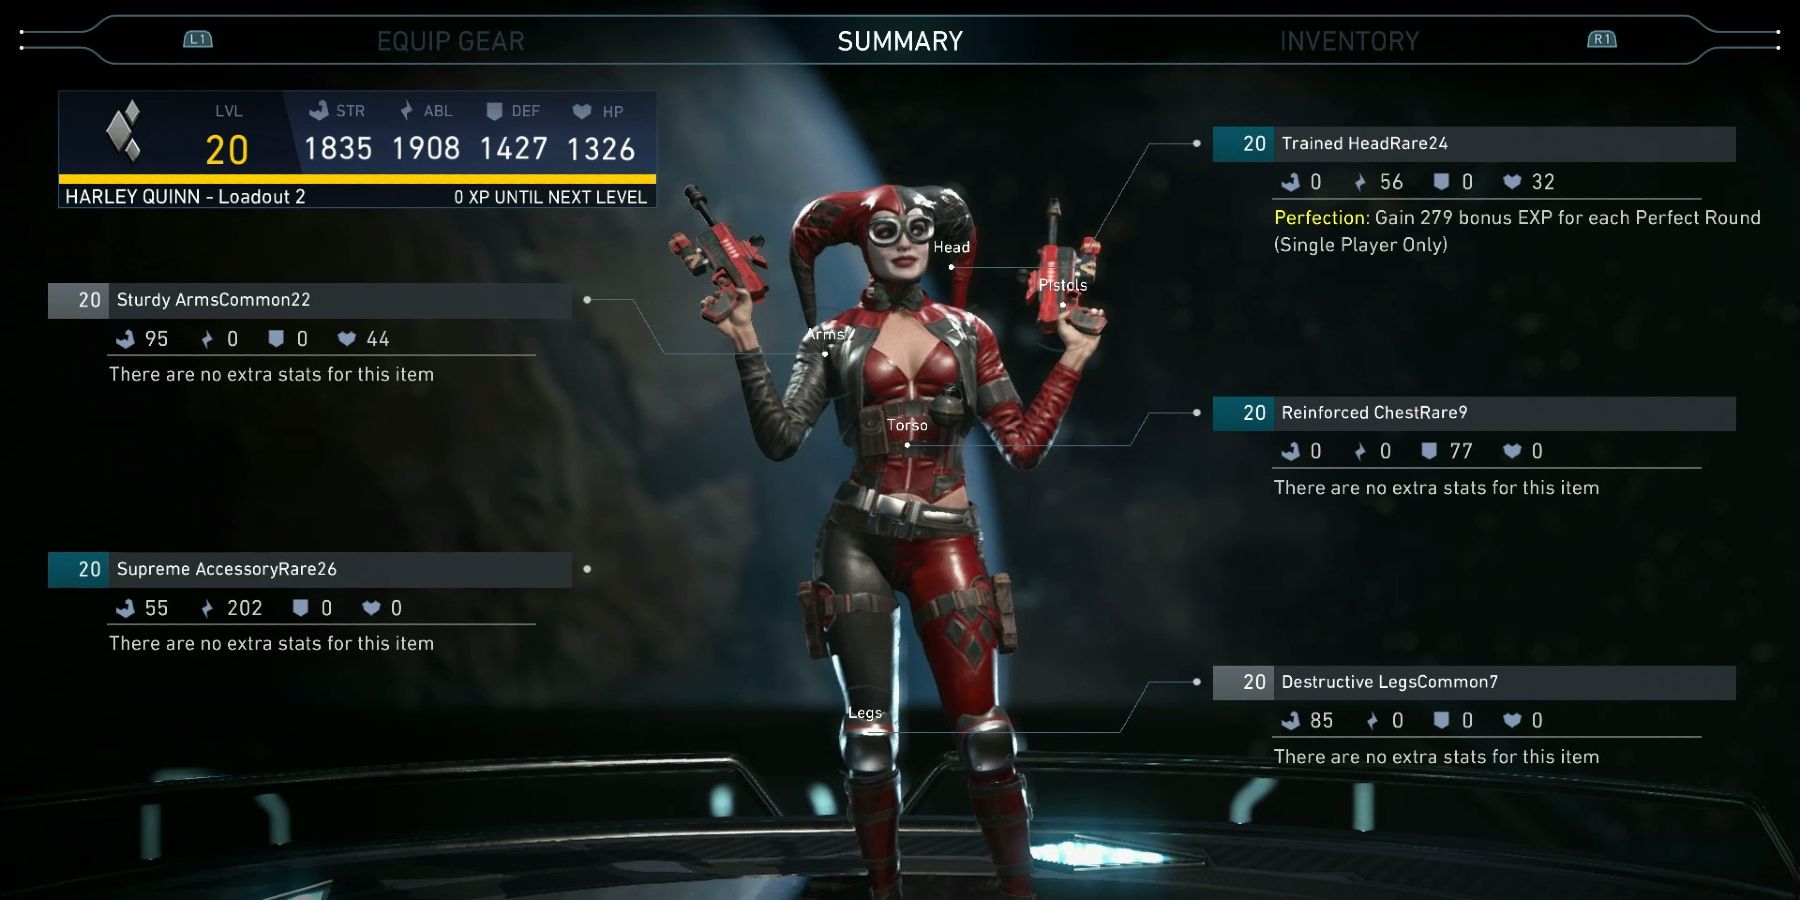 Harley Quinn's gear stat screen in Injustice 2